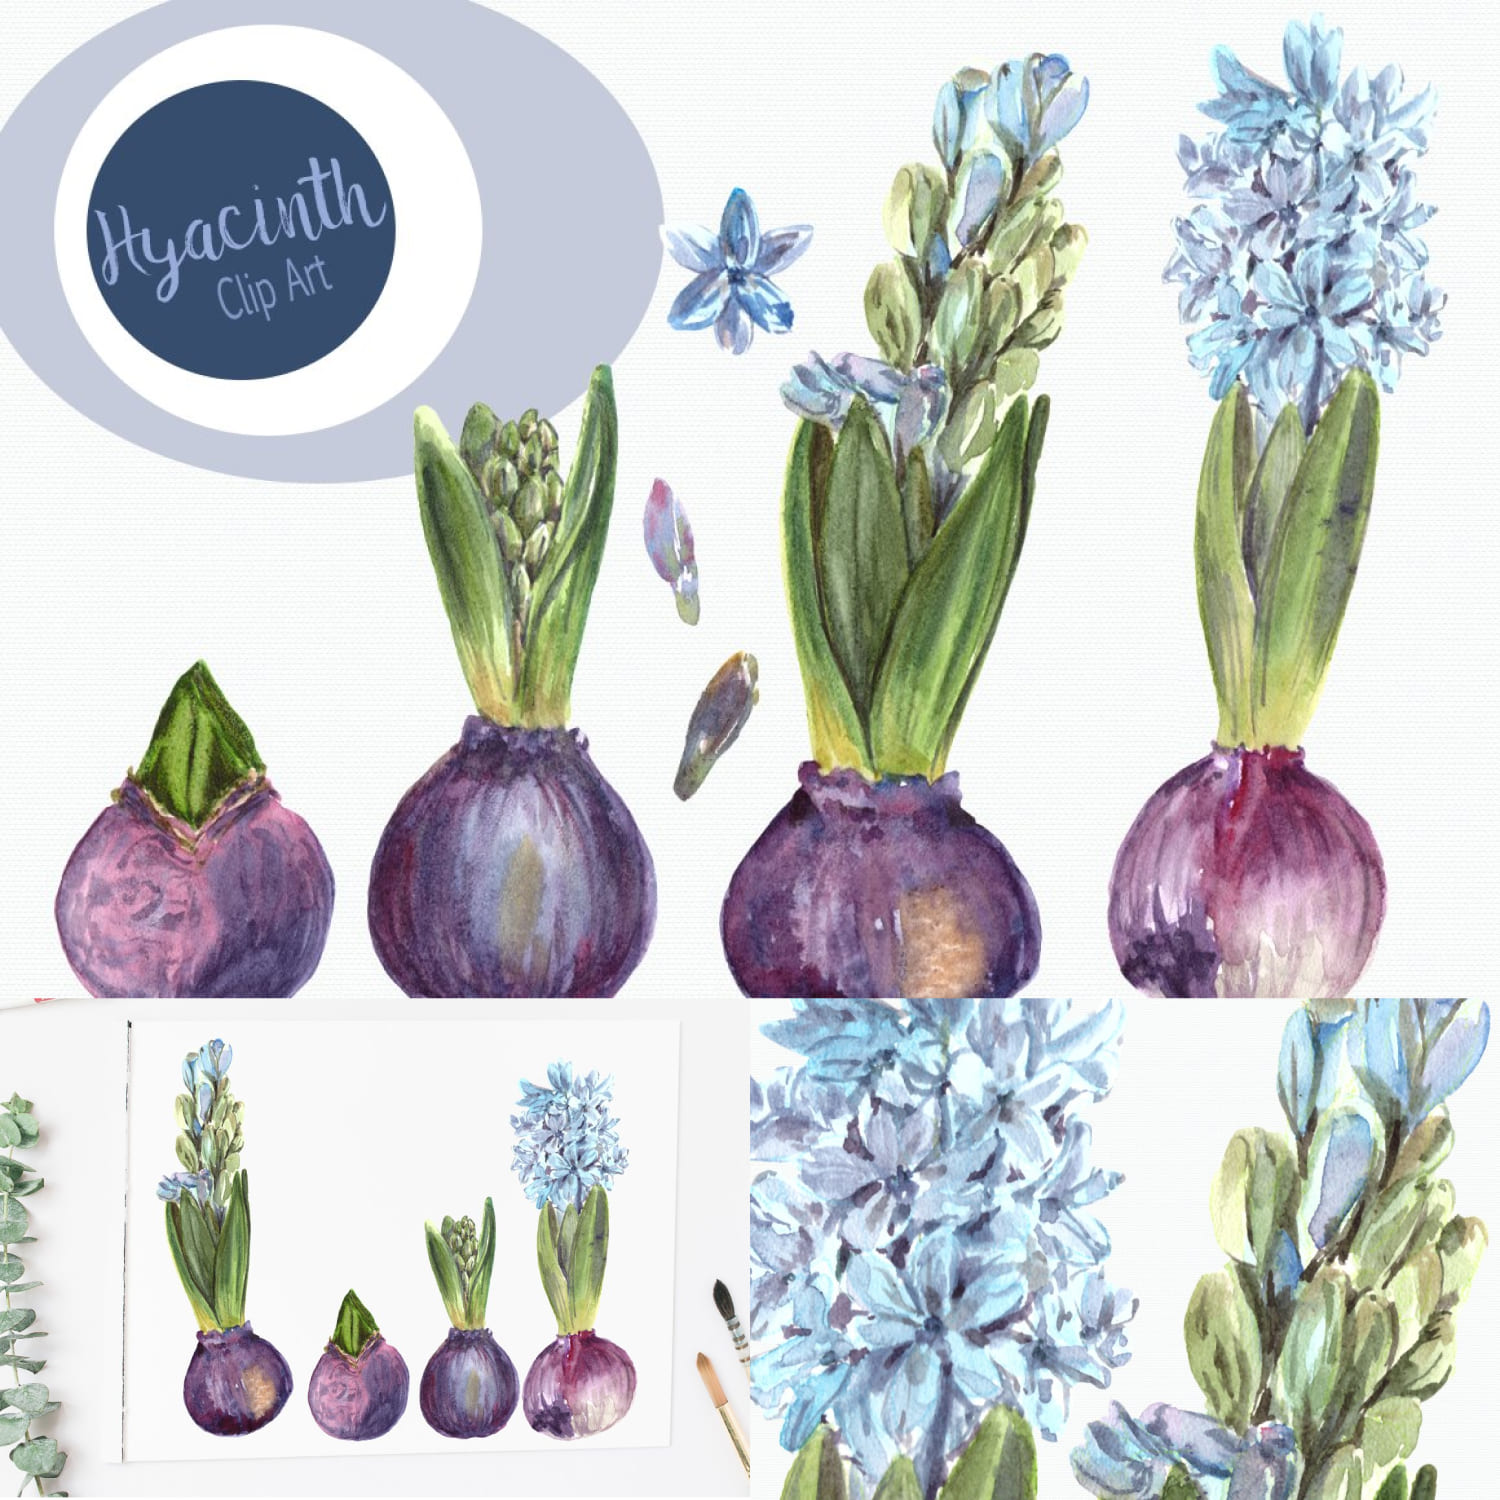 Watercolor Hyacinth Clip Art Set cover image.